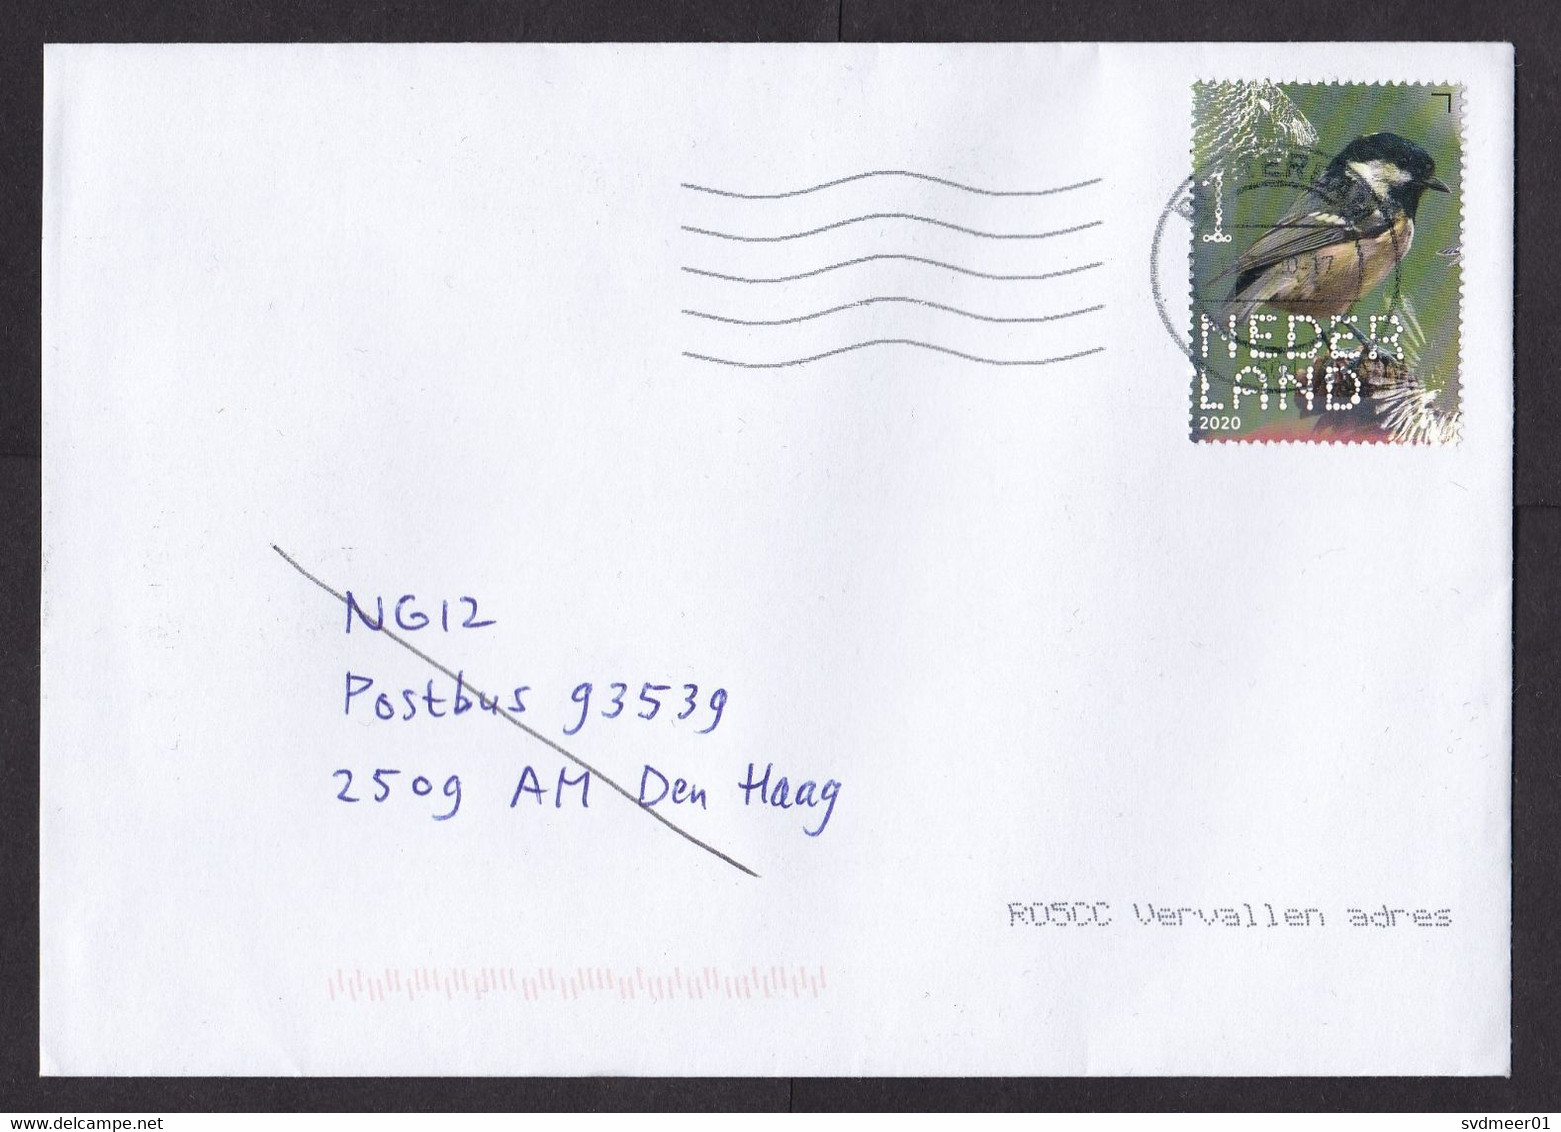 Netherlands: Cover, 2020, 1 Stamp, Titmouse Bird, Retour, Returned, Printed Address Cancelled (traces Of Use) - Briefe U. Dokumente